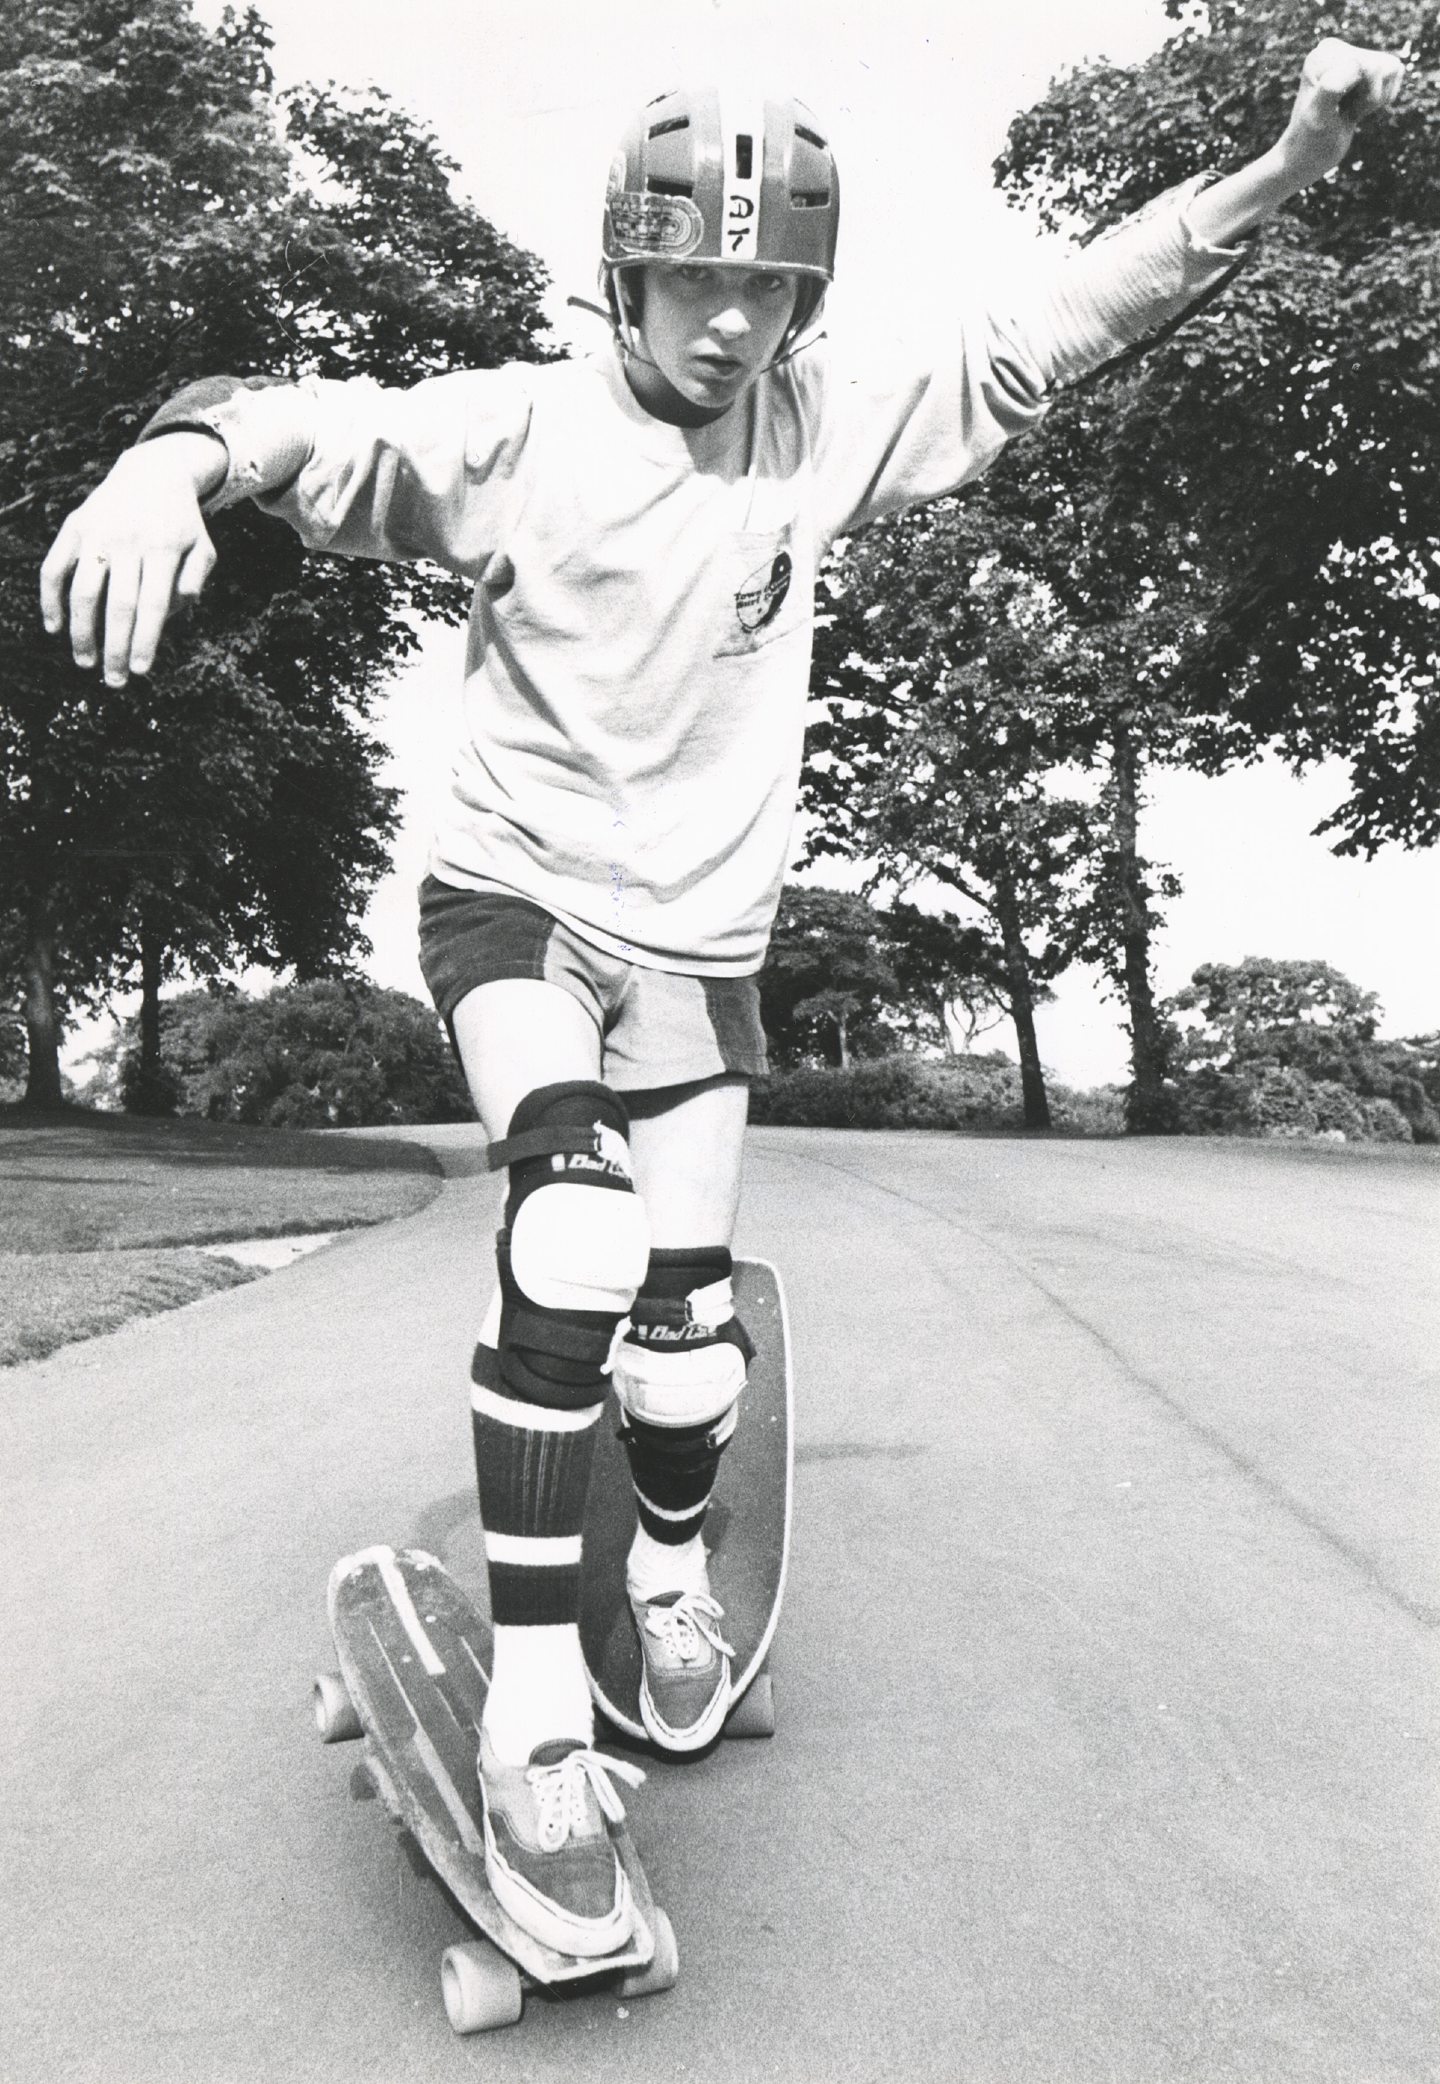 Young Aberdeen Grammar schoolboy on a skateboard in 1979.